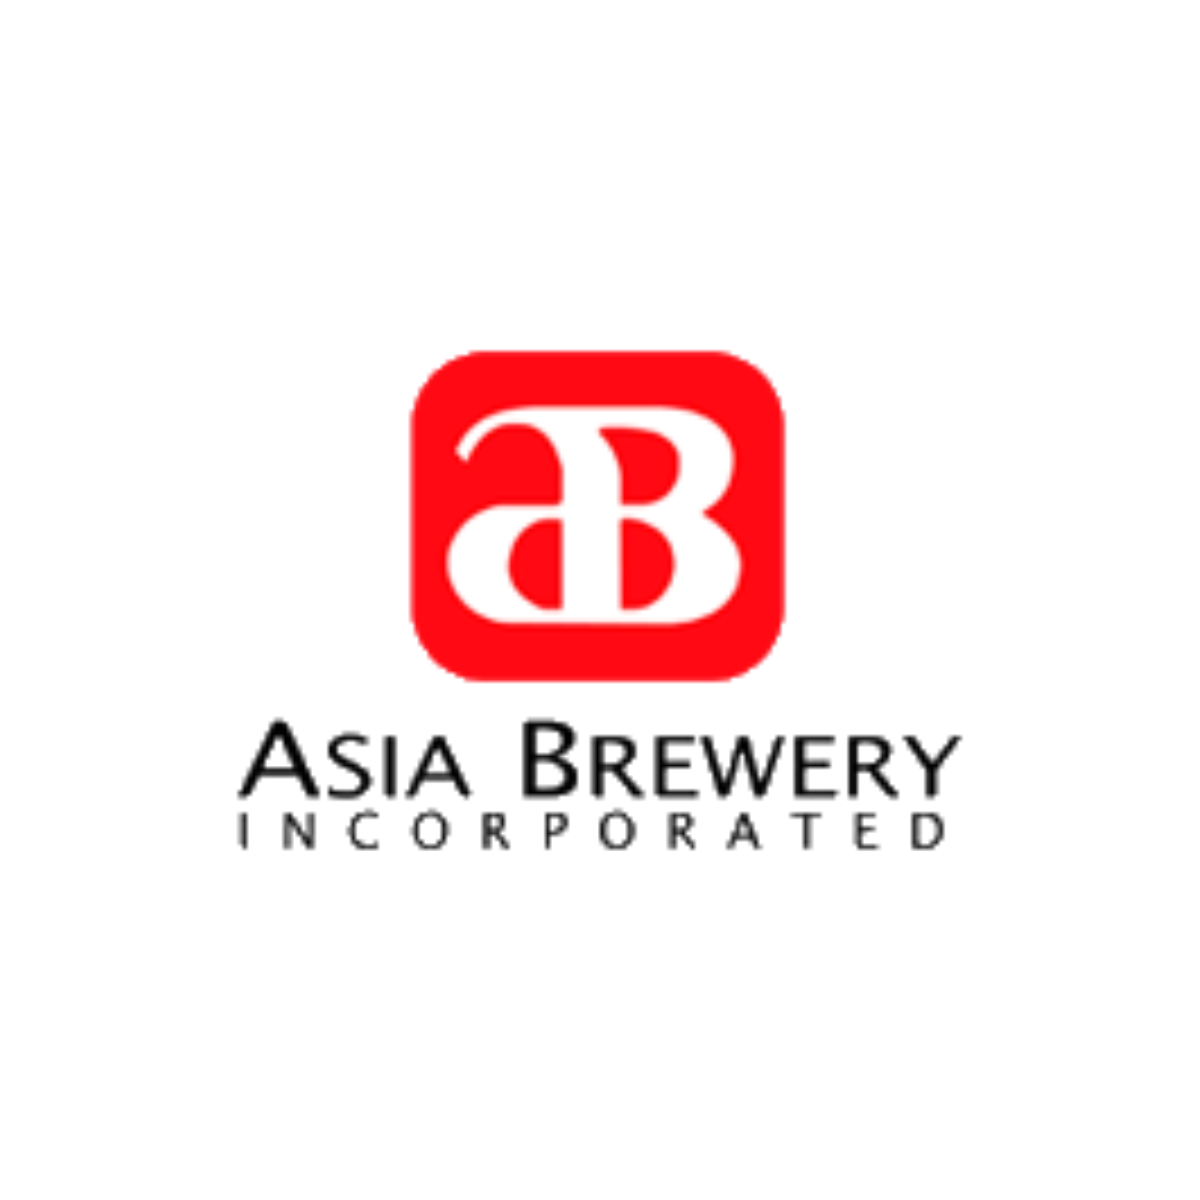 Asia brewery logo